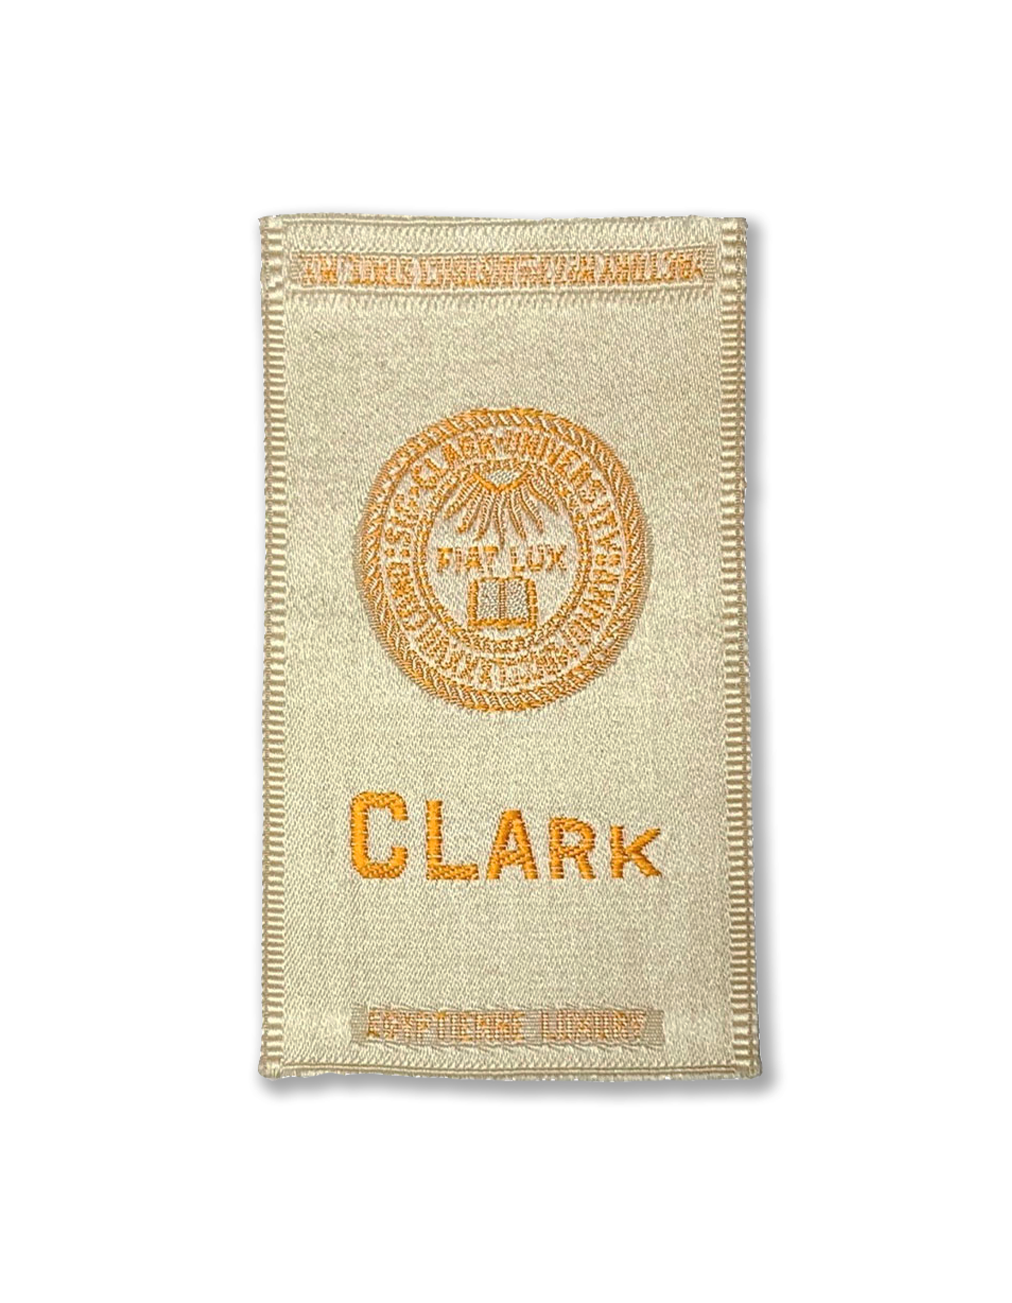 Clark University Silk Paperweight